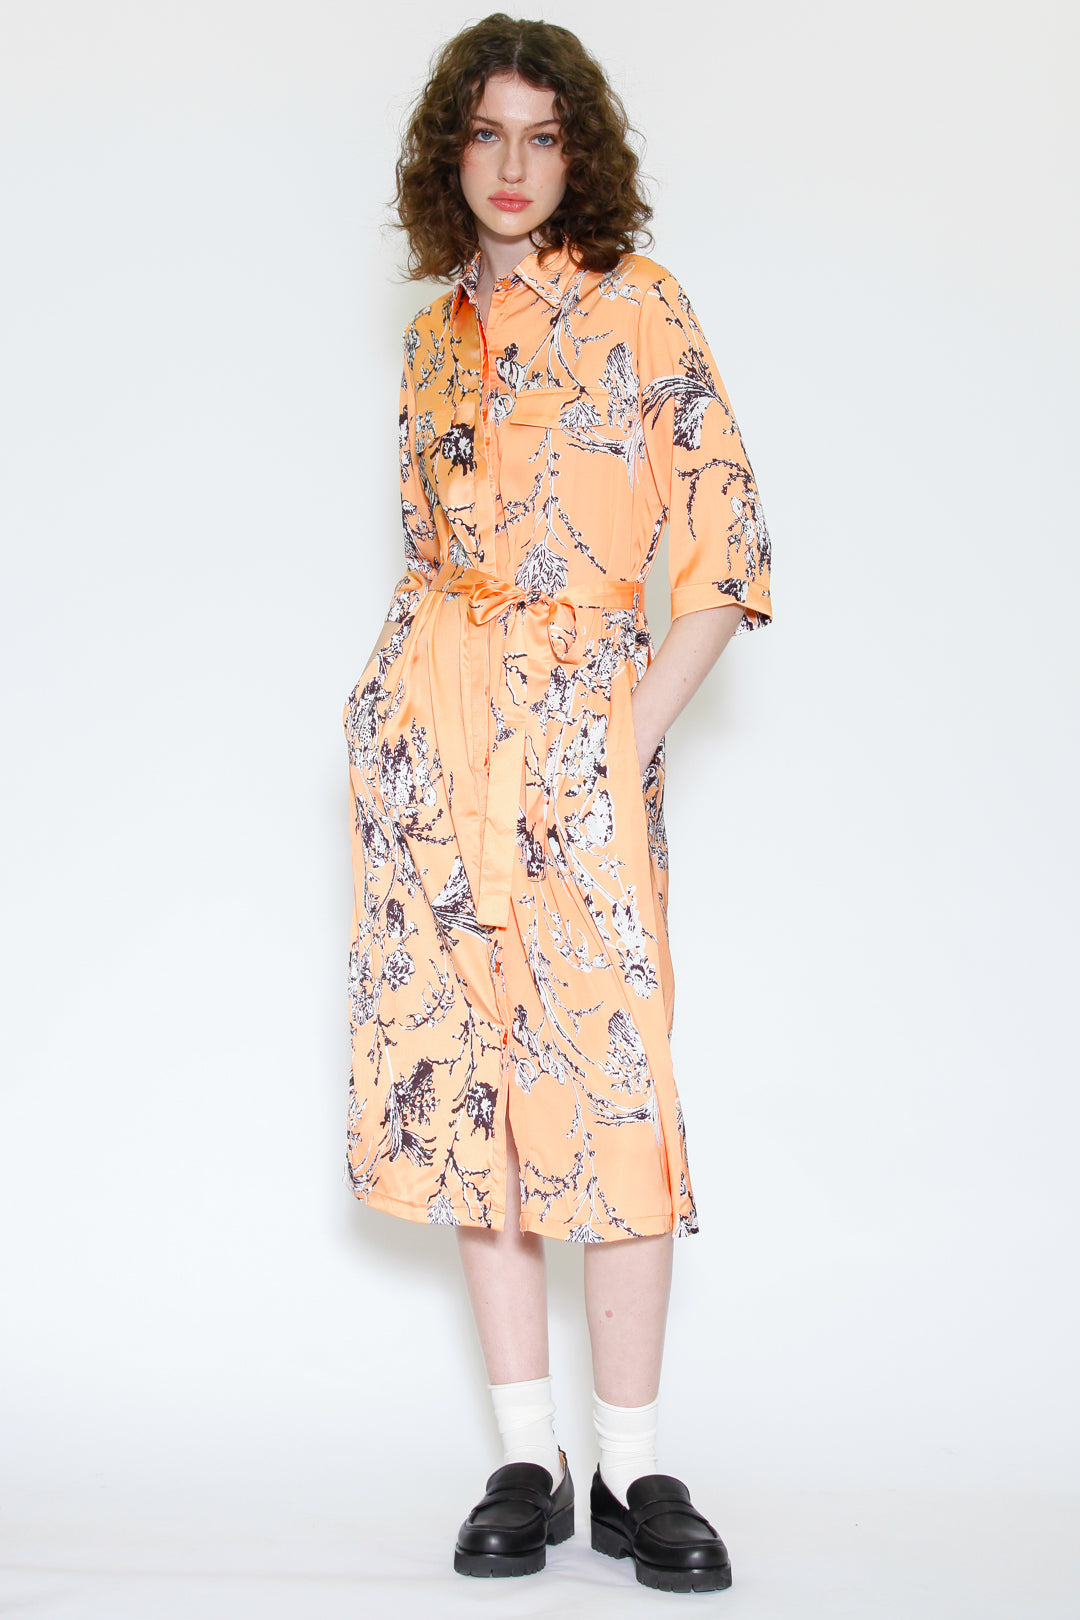 Silk Print Orange Floral Button-Down Dress